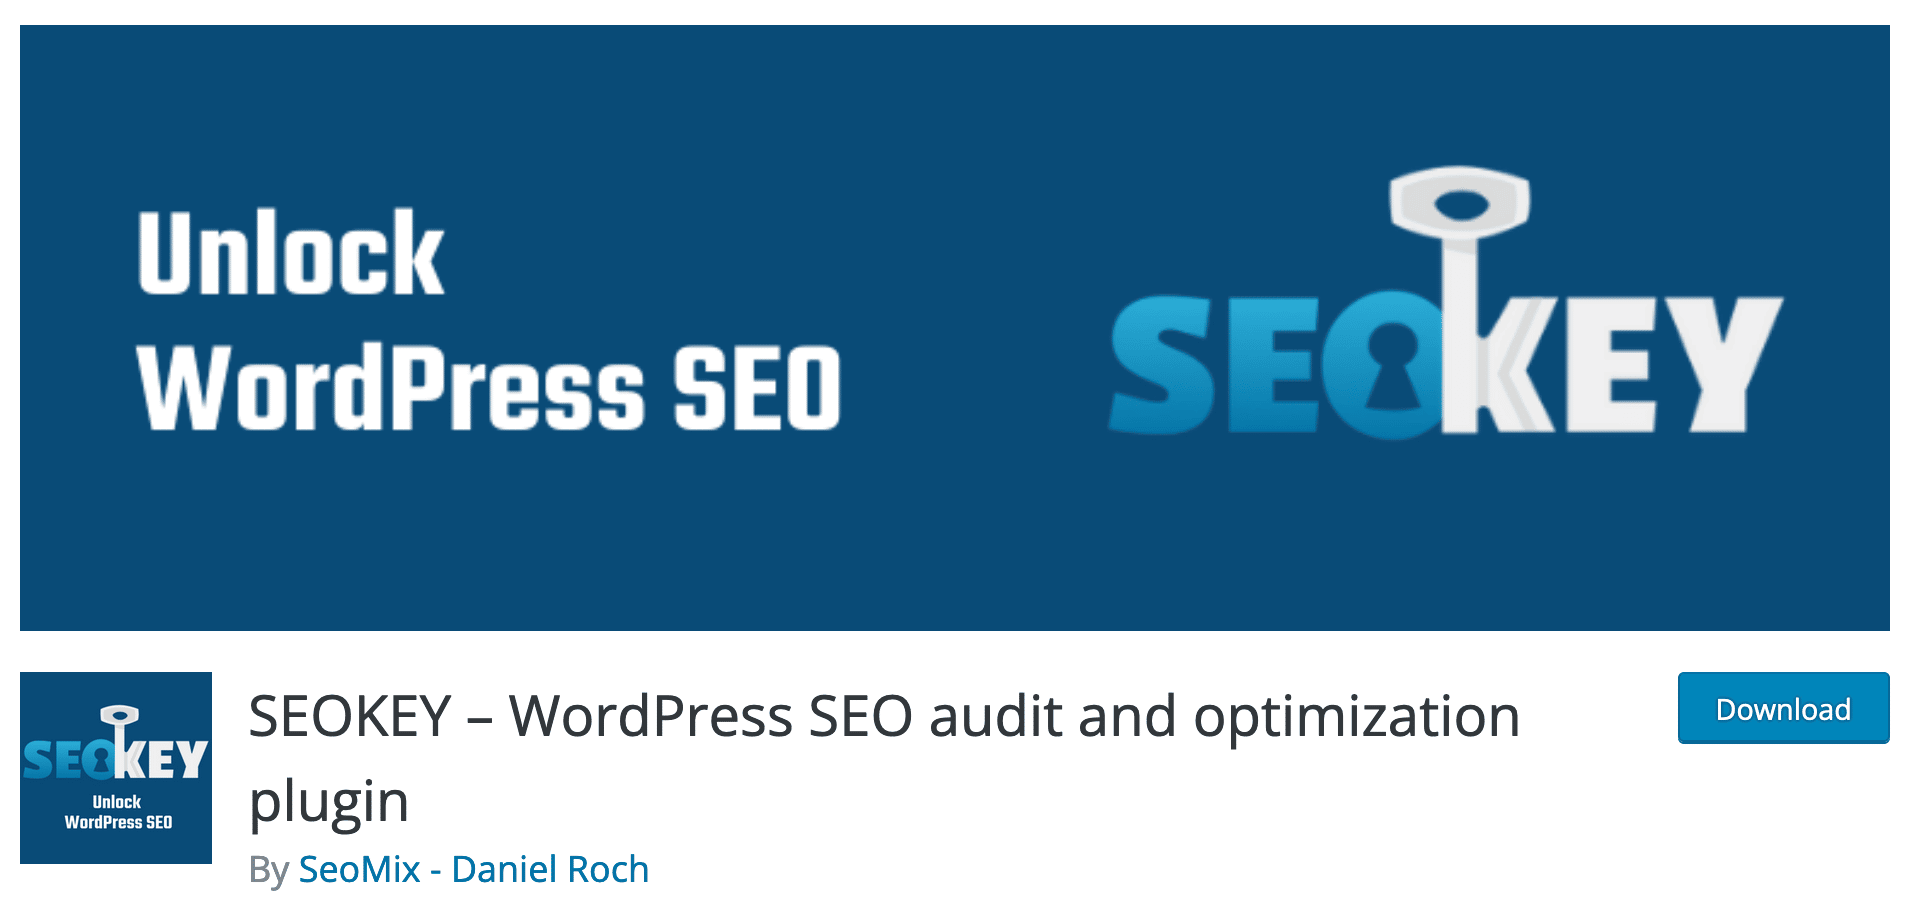 SEOKEY is an SEO optimization plugin for WordPress.